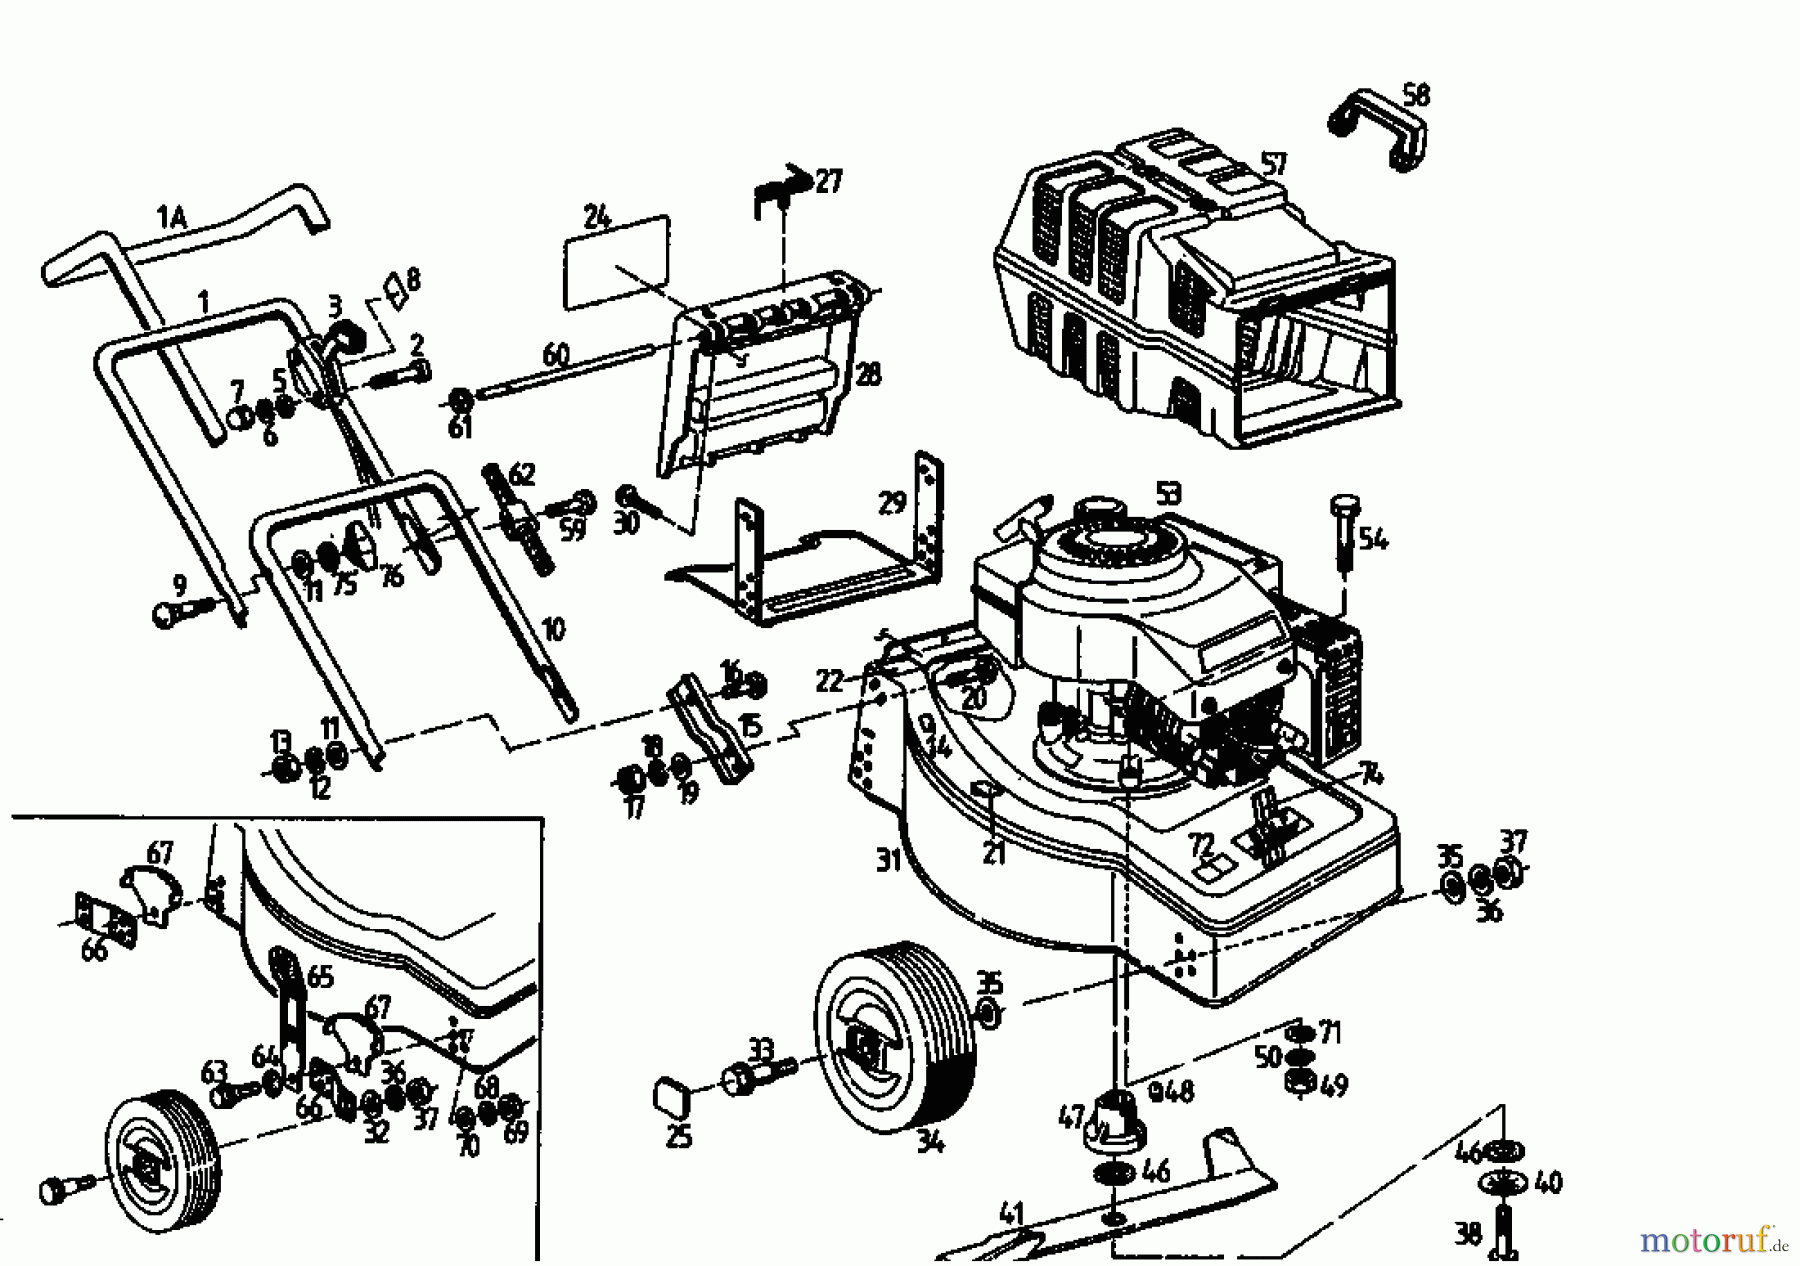  Golf Petrol mower B 02813.04  (1994) Basic machine